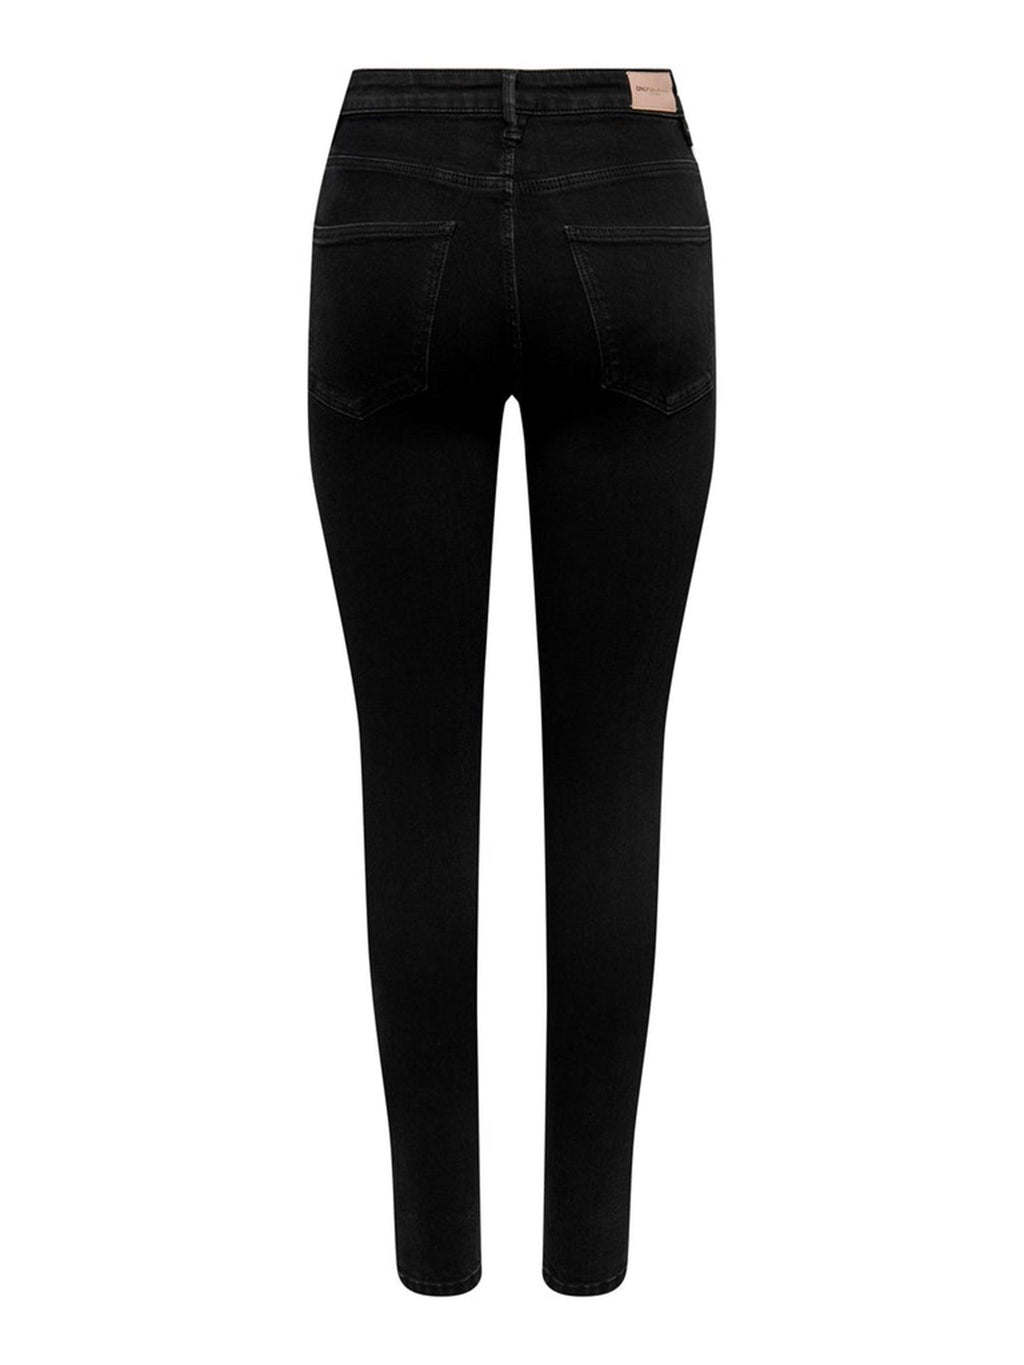 Iconic Highwaist Jeans - Black